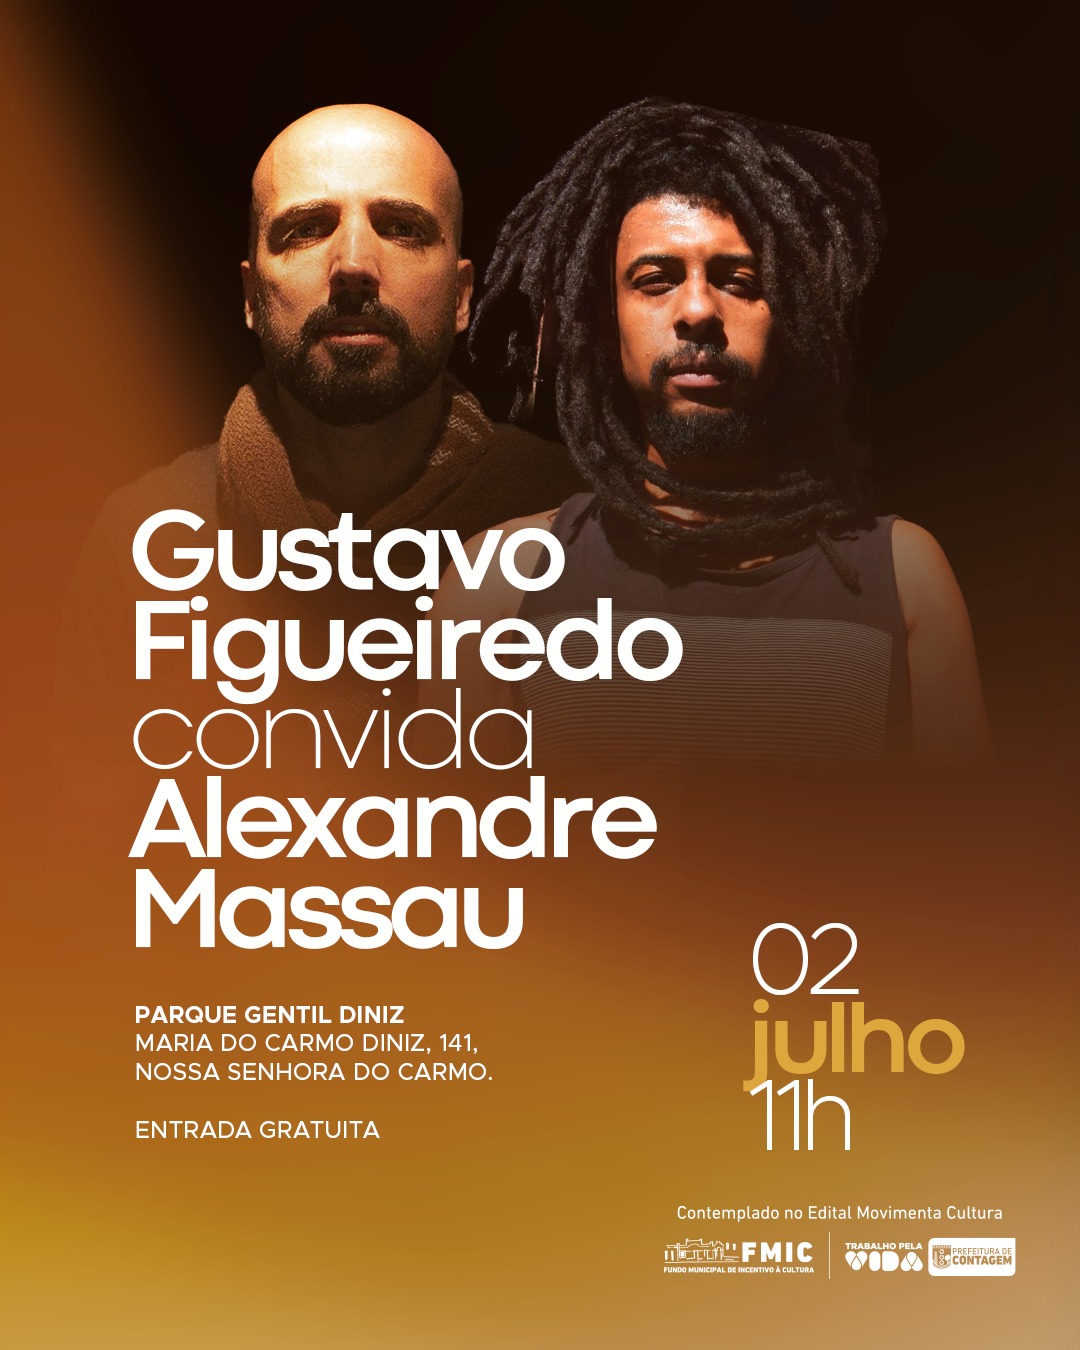 Pianista Gustavo Figueiredo se une a Alexandre Massau em show gratuito